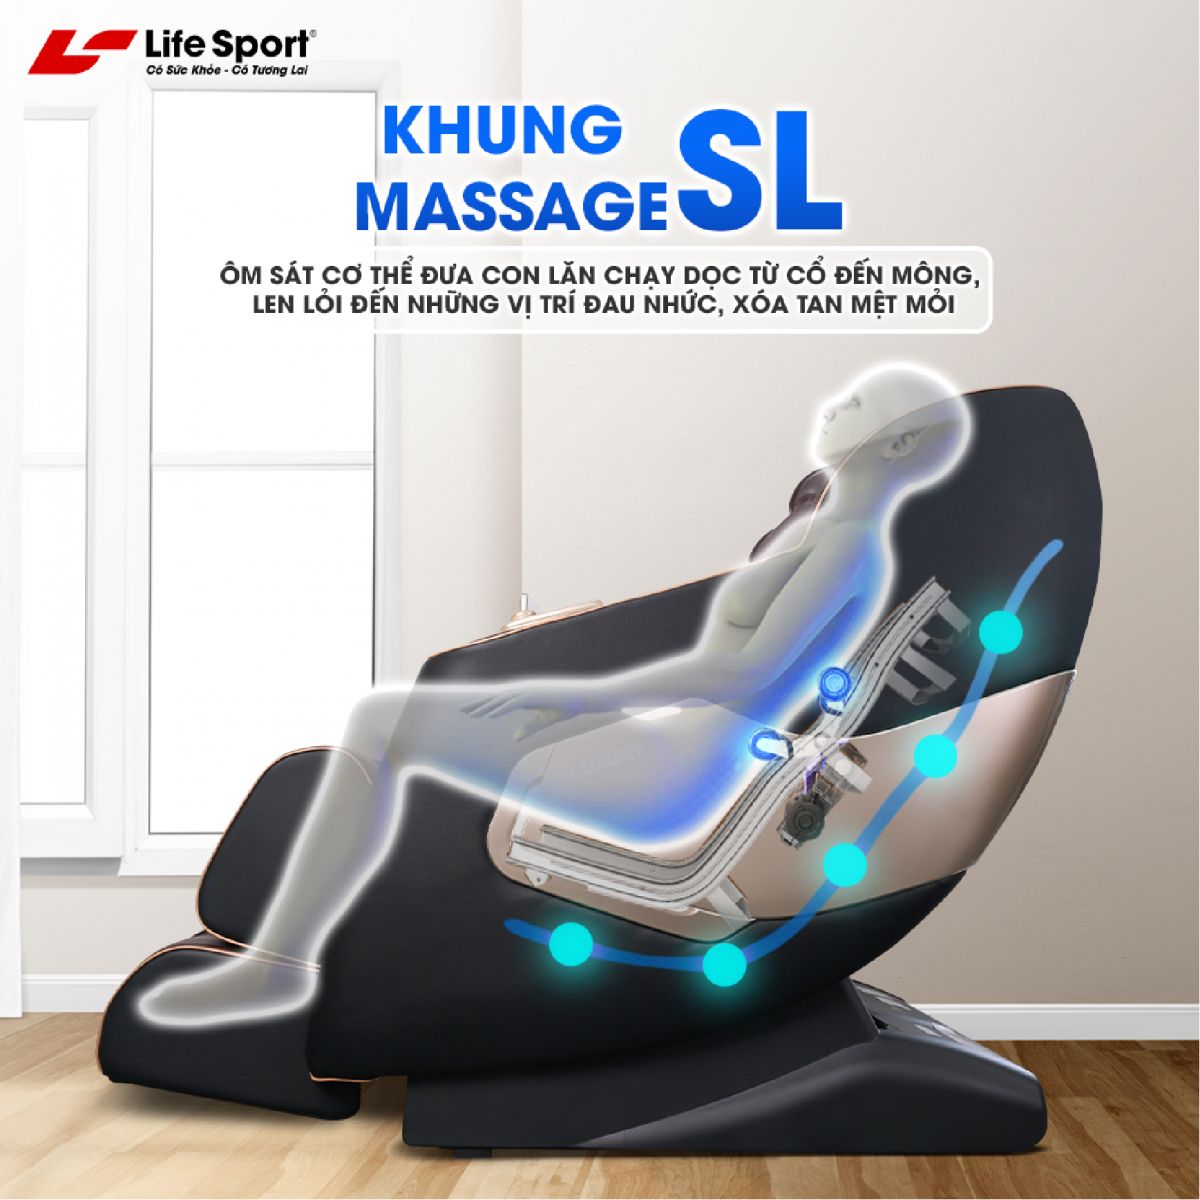 ghe massage lifesport ls666 2